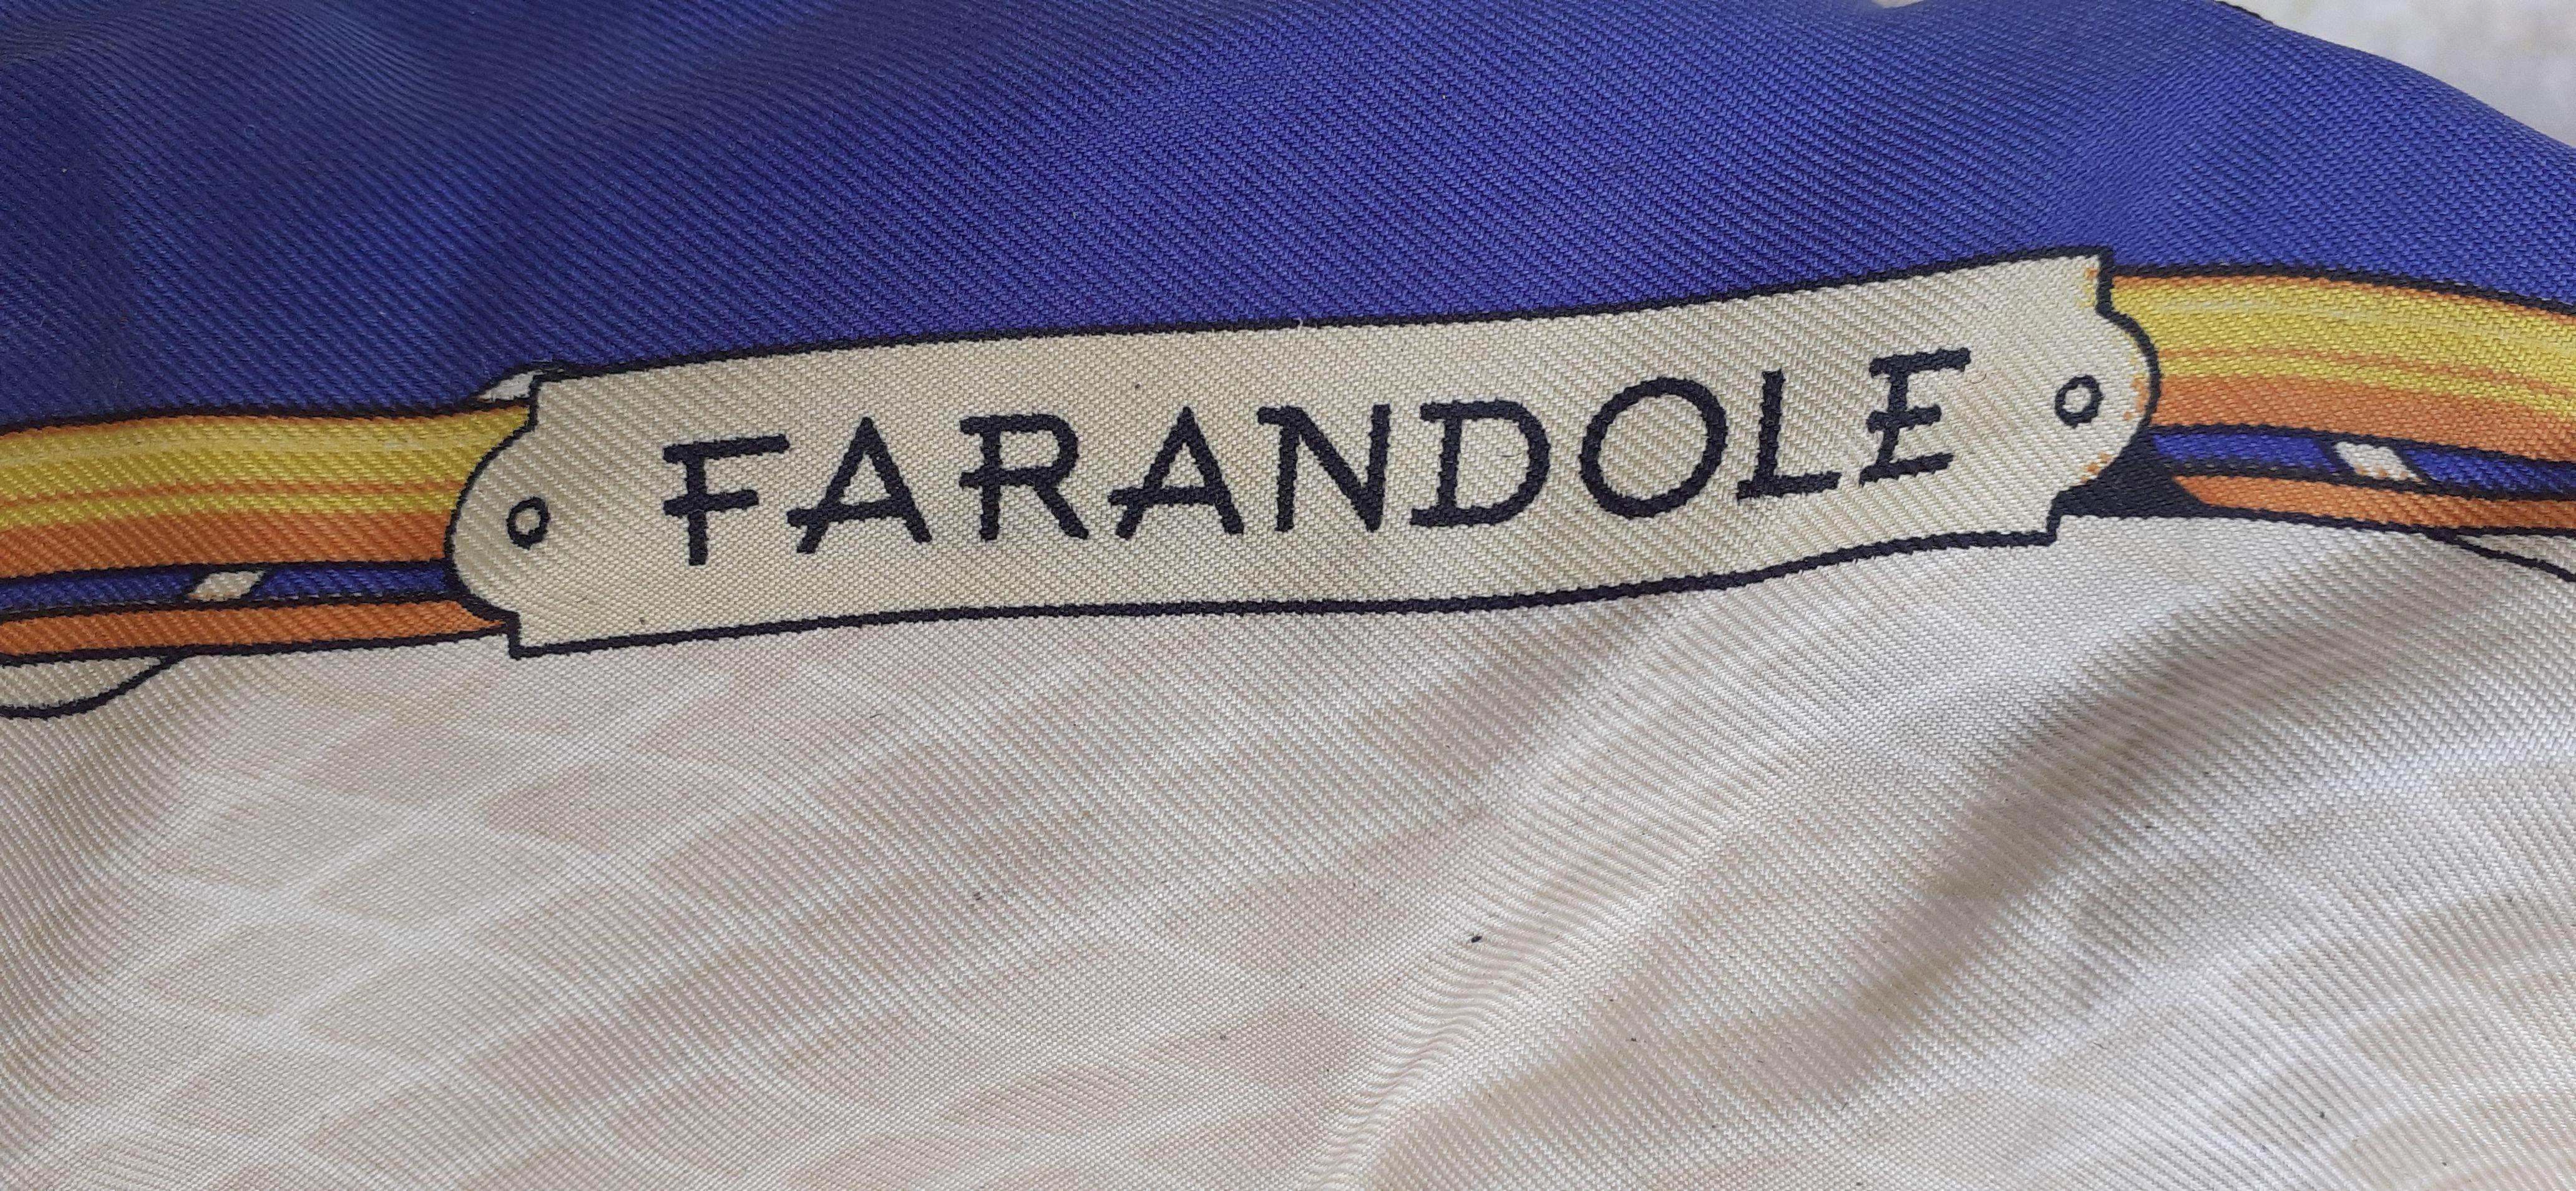 Exceptional Hermès Vintage Kite Farandole Butterflies Print RARE 6